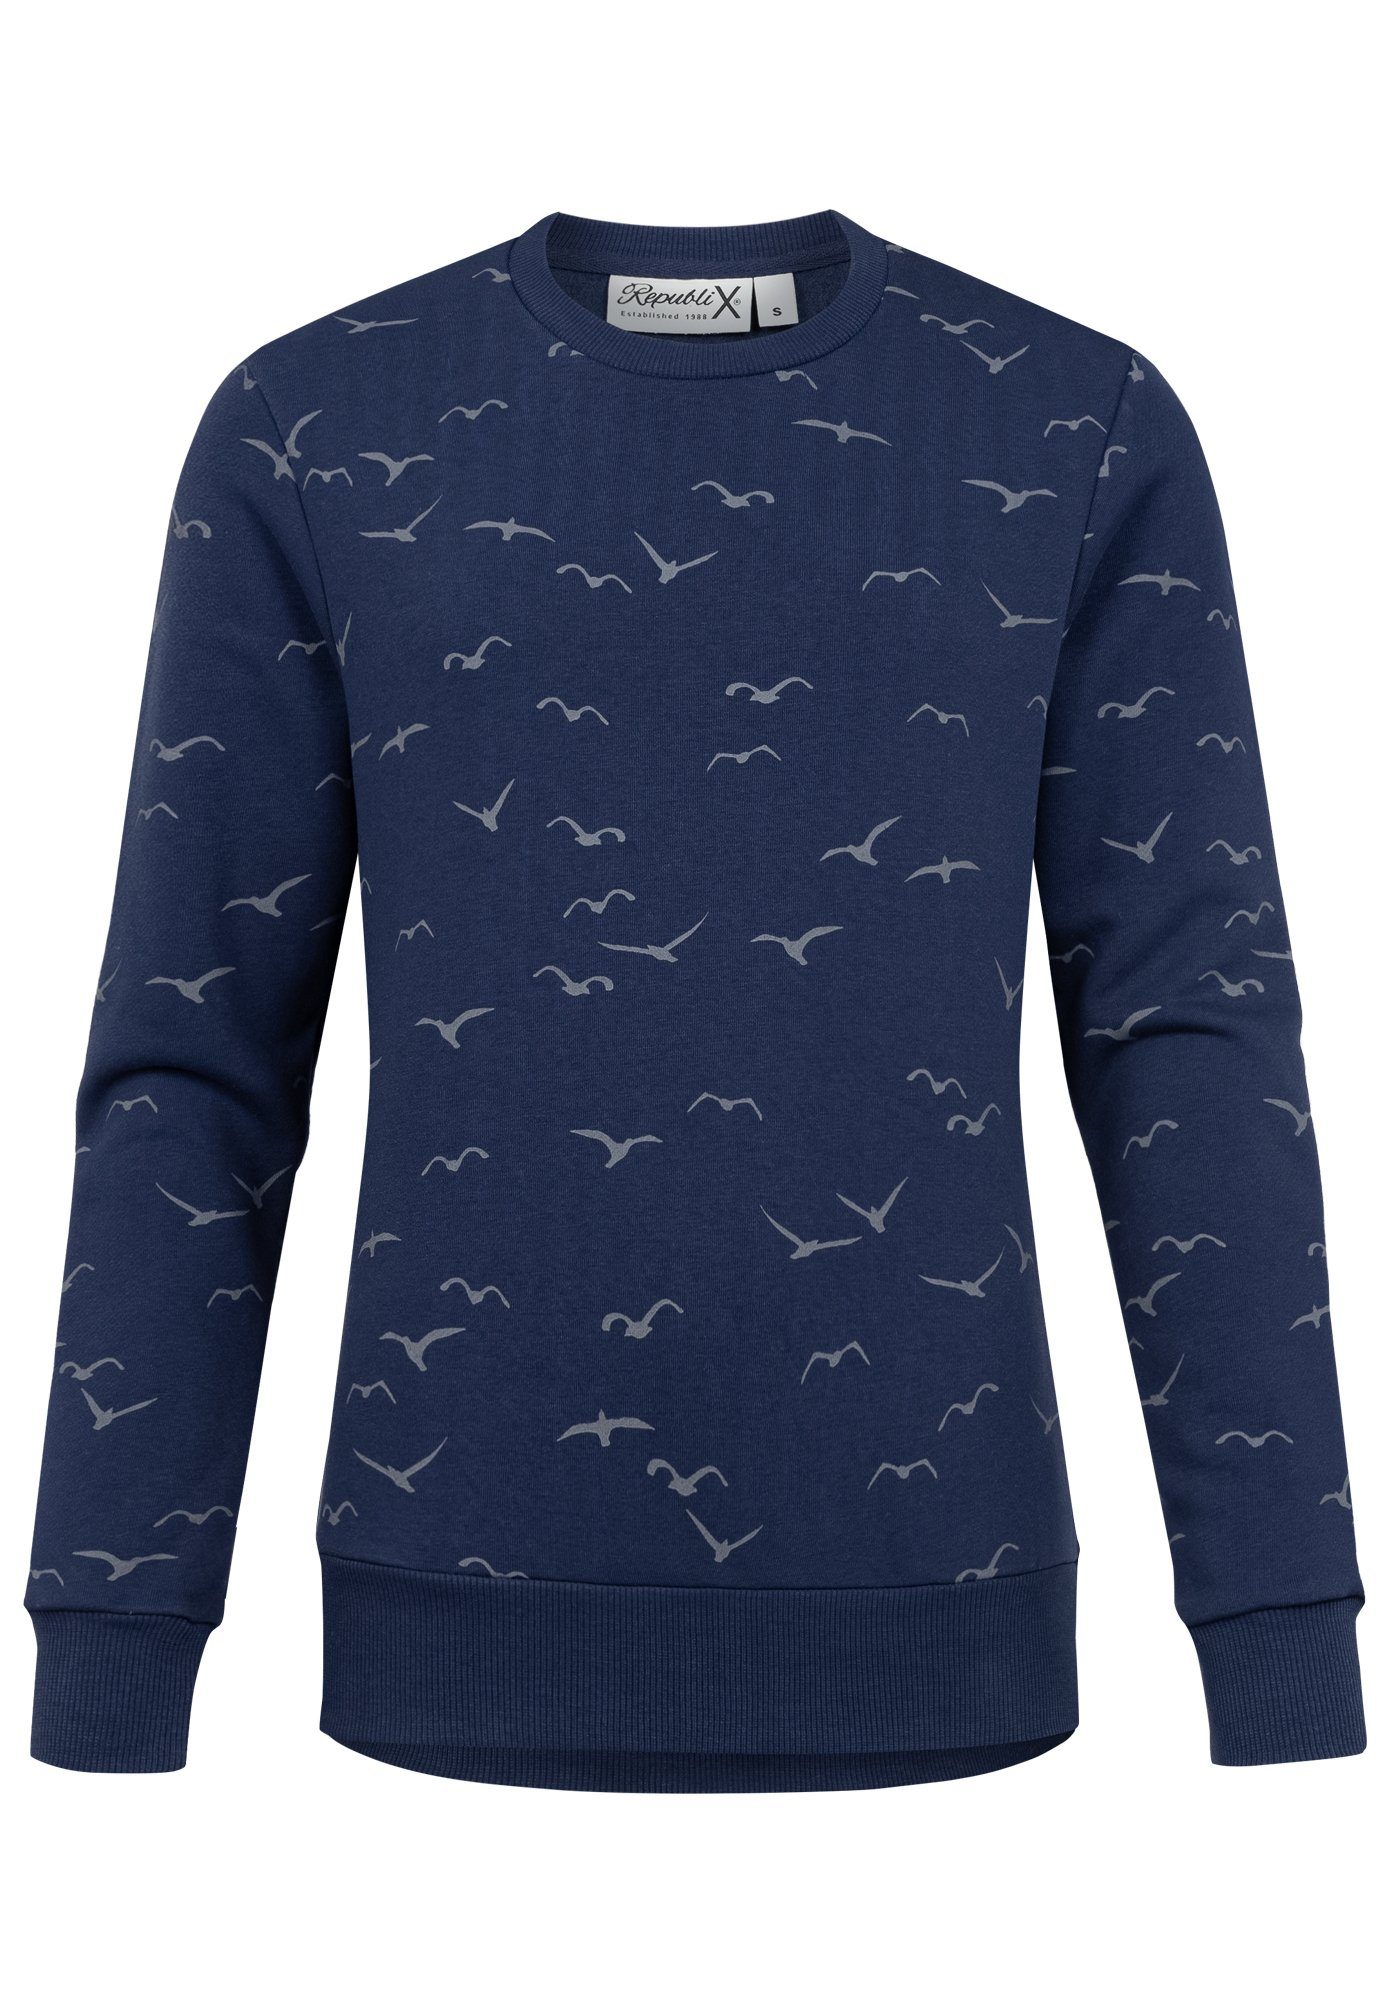 Sweatshirt Print REPUBLIX Pullover Hoodie ANA Navyblau Damen Sweatjacke Kapuzenpullover